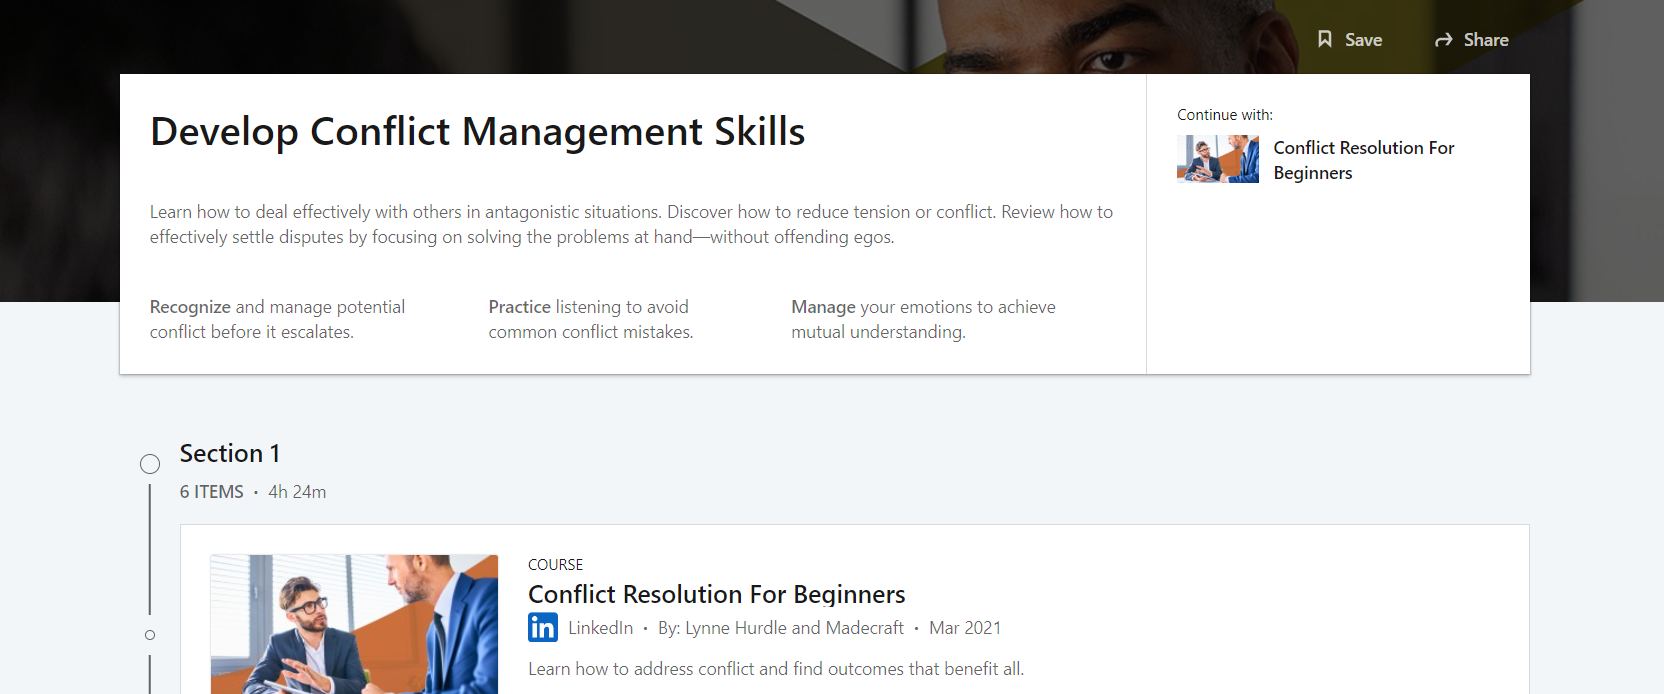 LinkedIn Learning: Develop Conflict Management Skills course